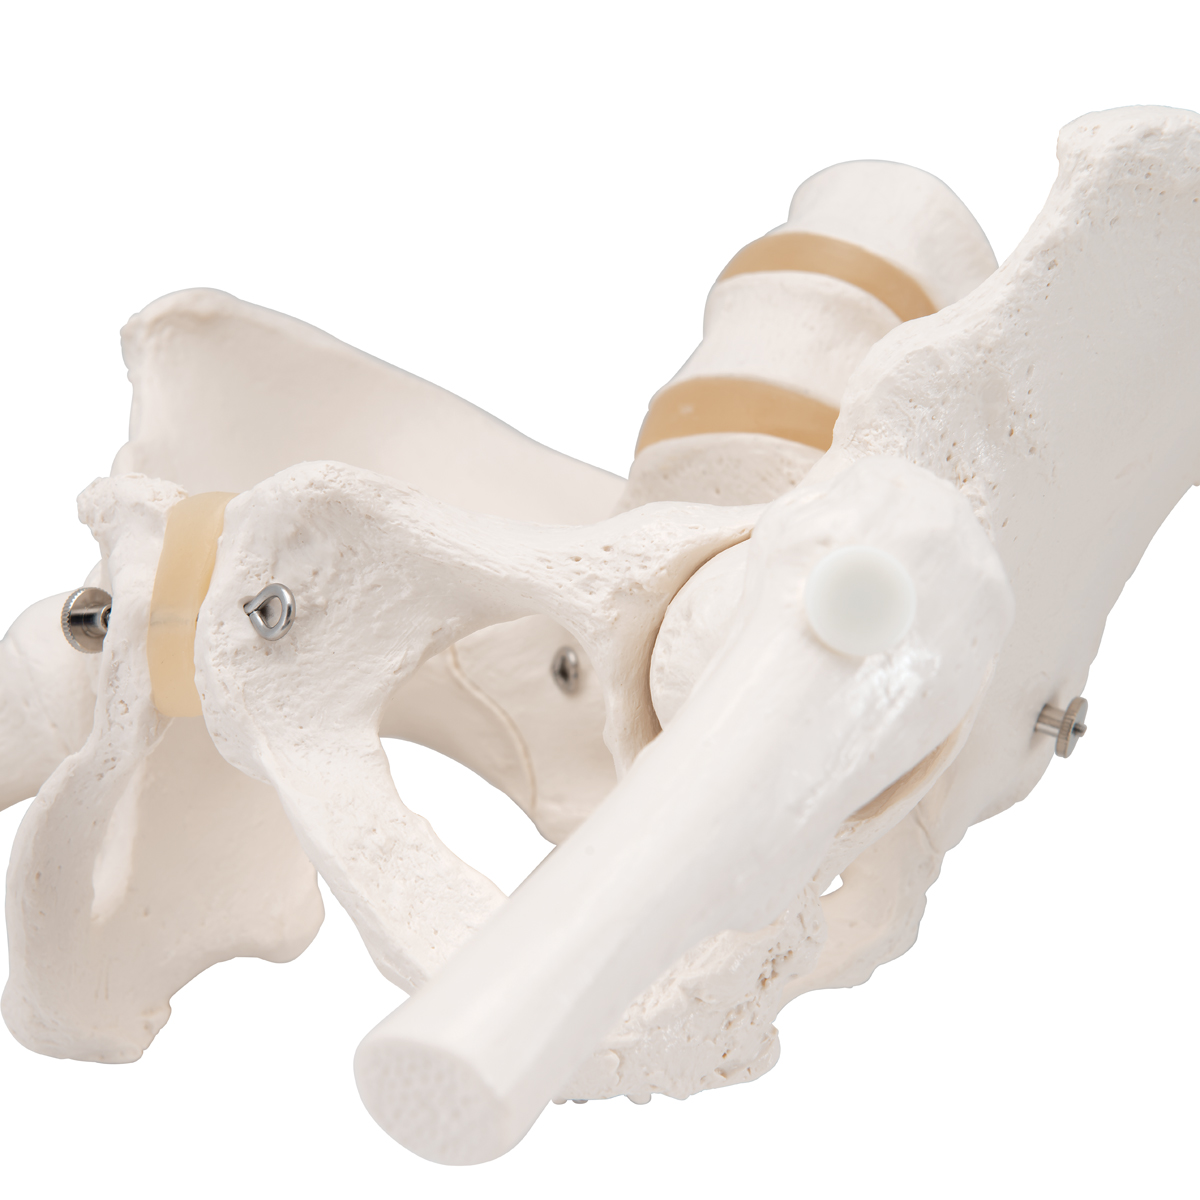  Squelette  du bassin f minin avec moignons de f mur 